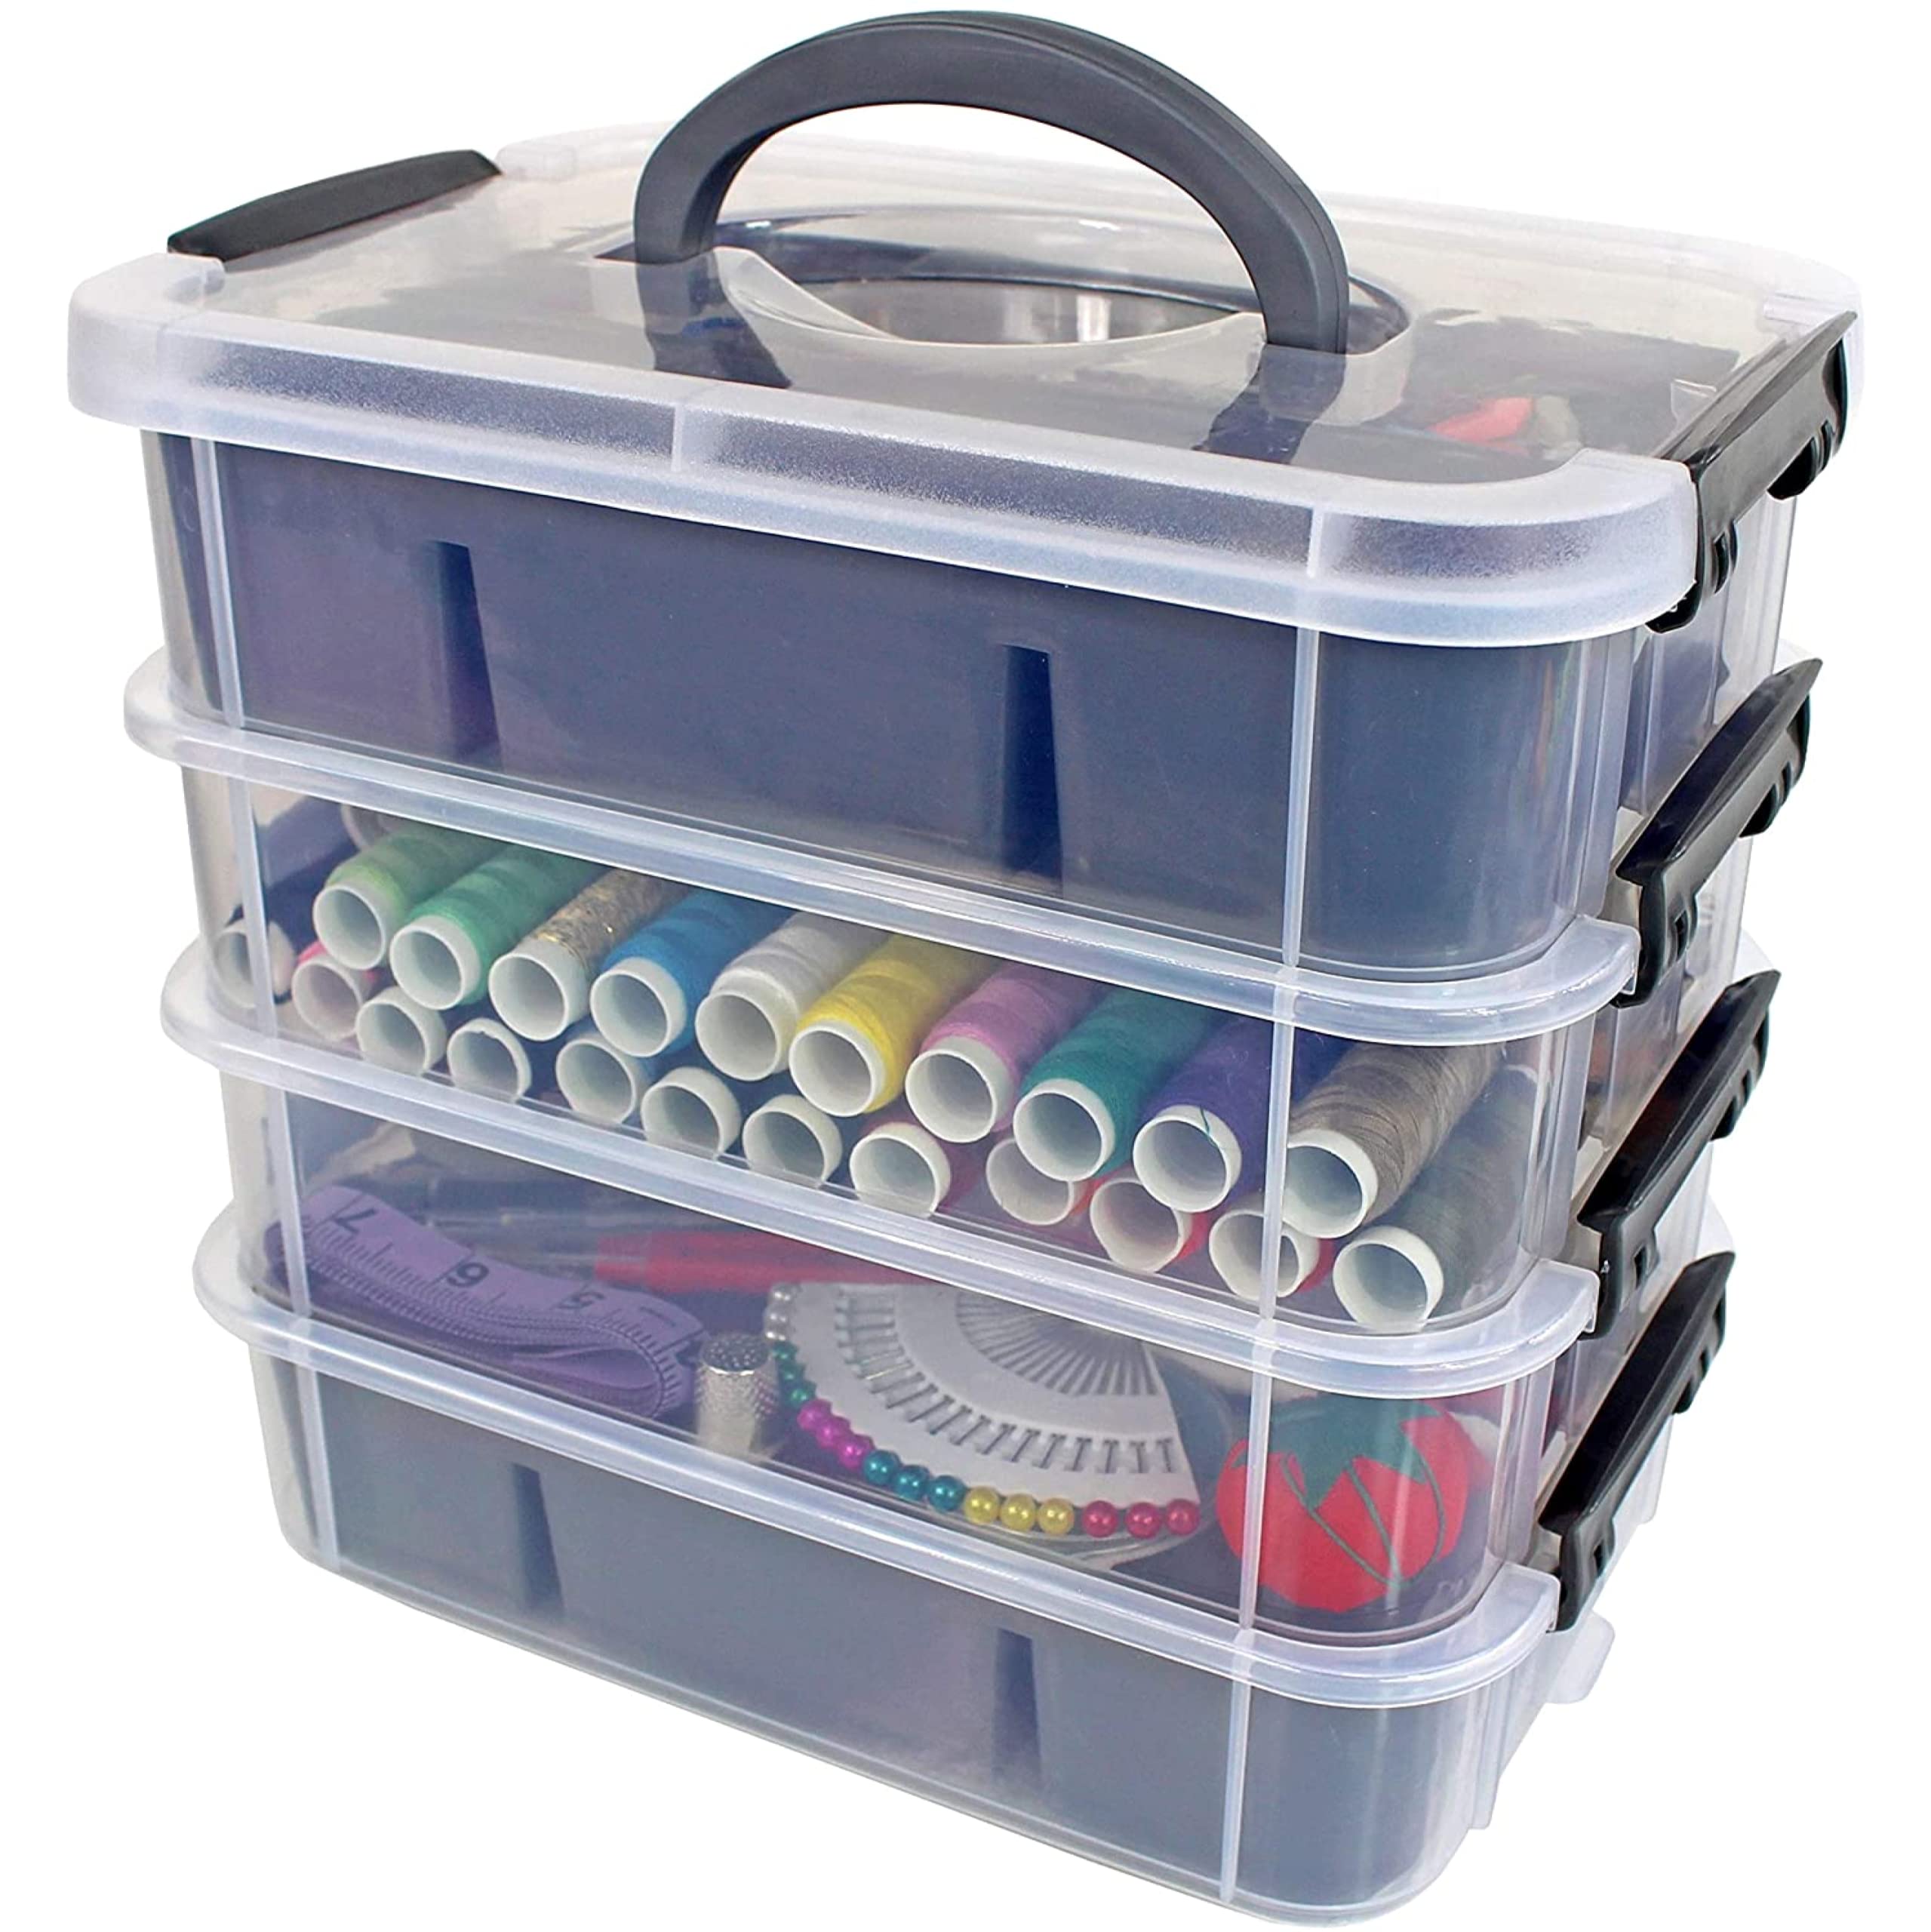  Storage Bins - Plastic Organizers and Storage Box